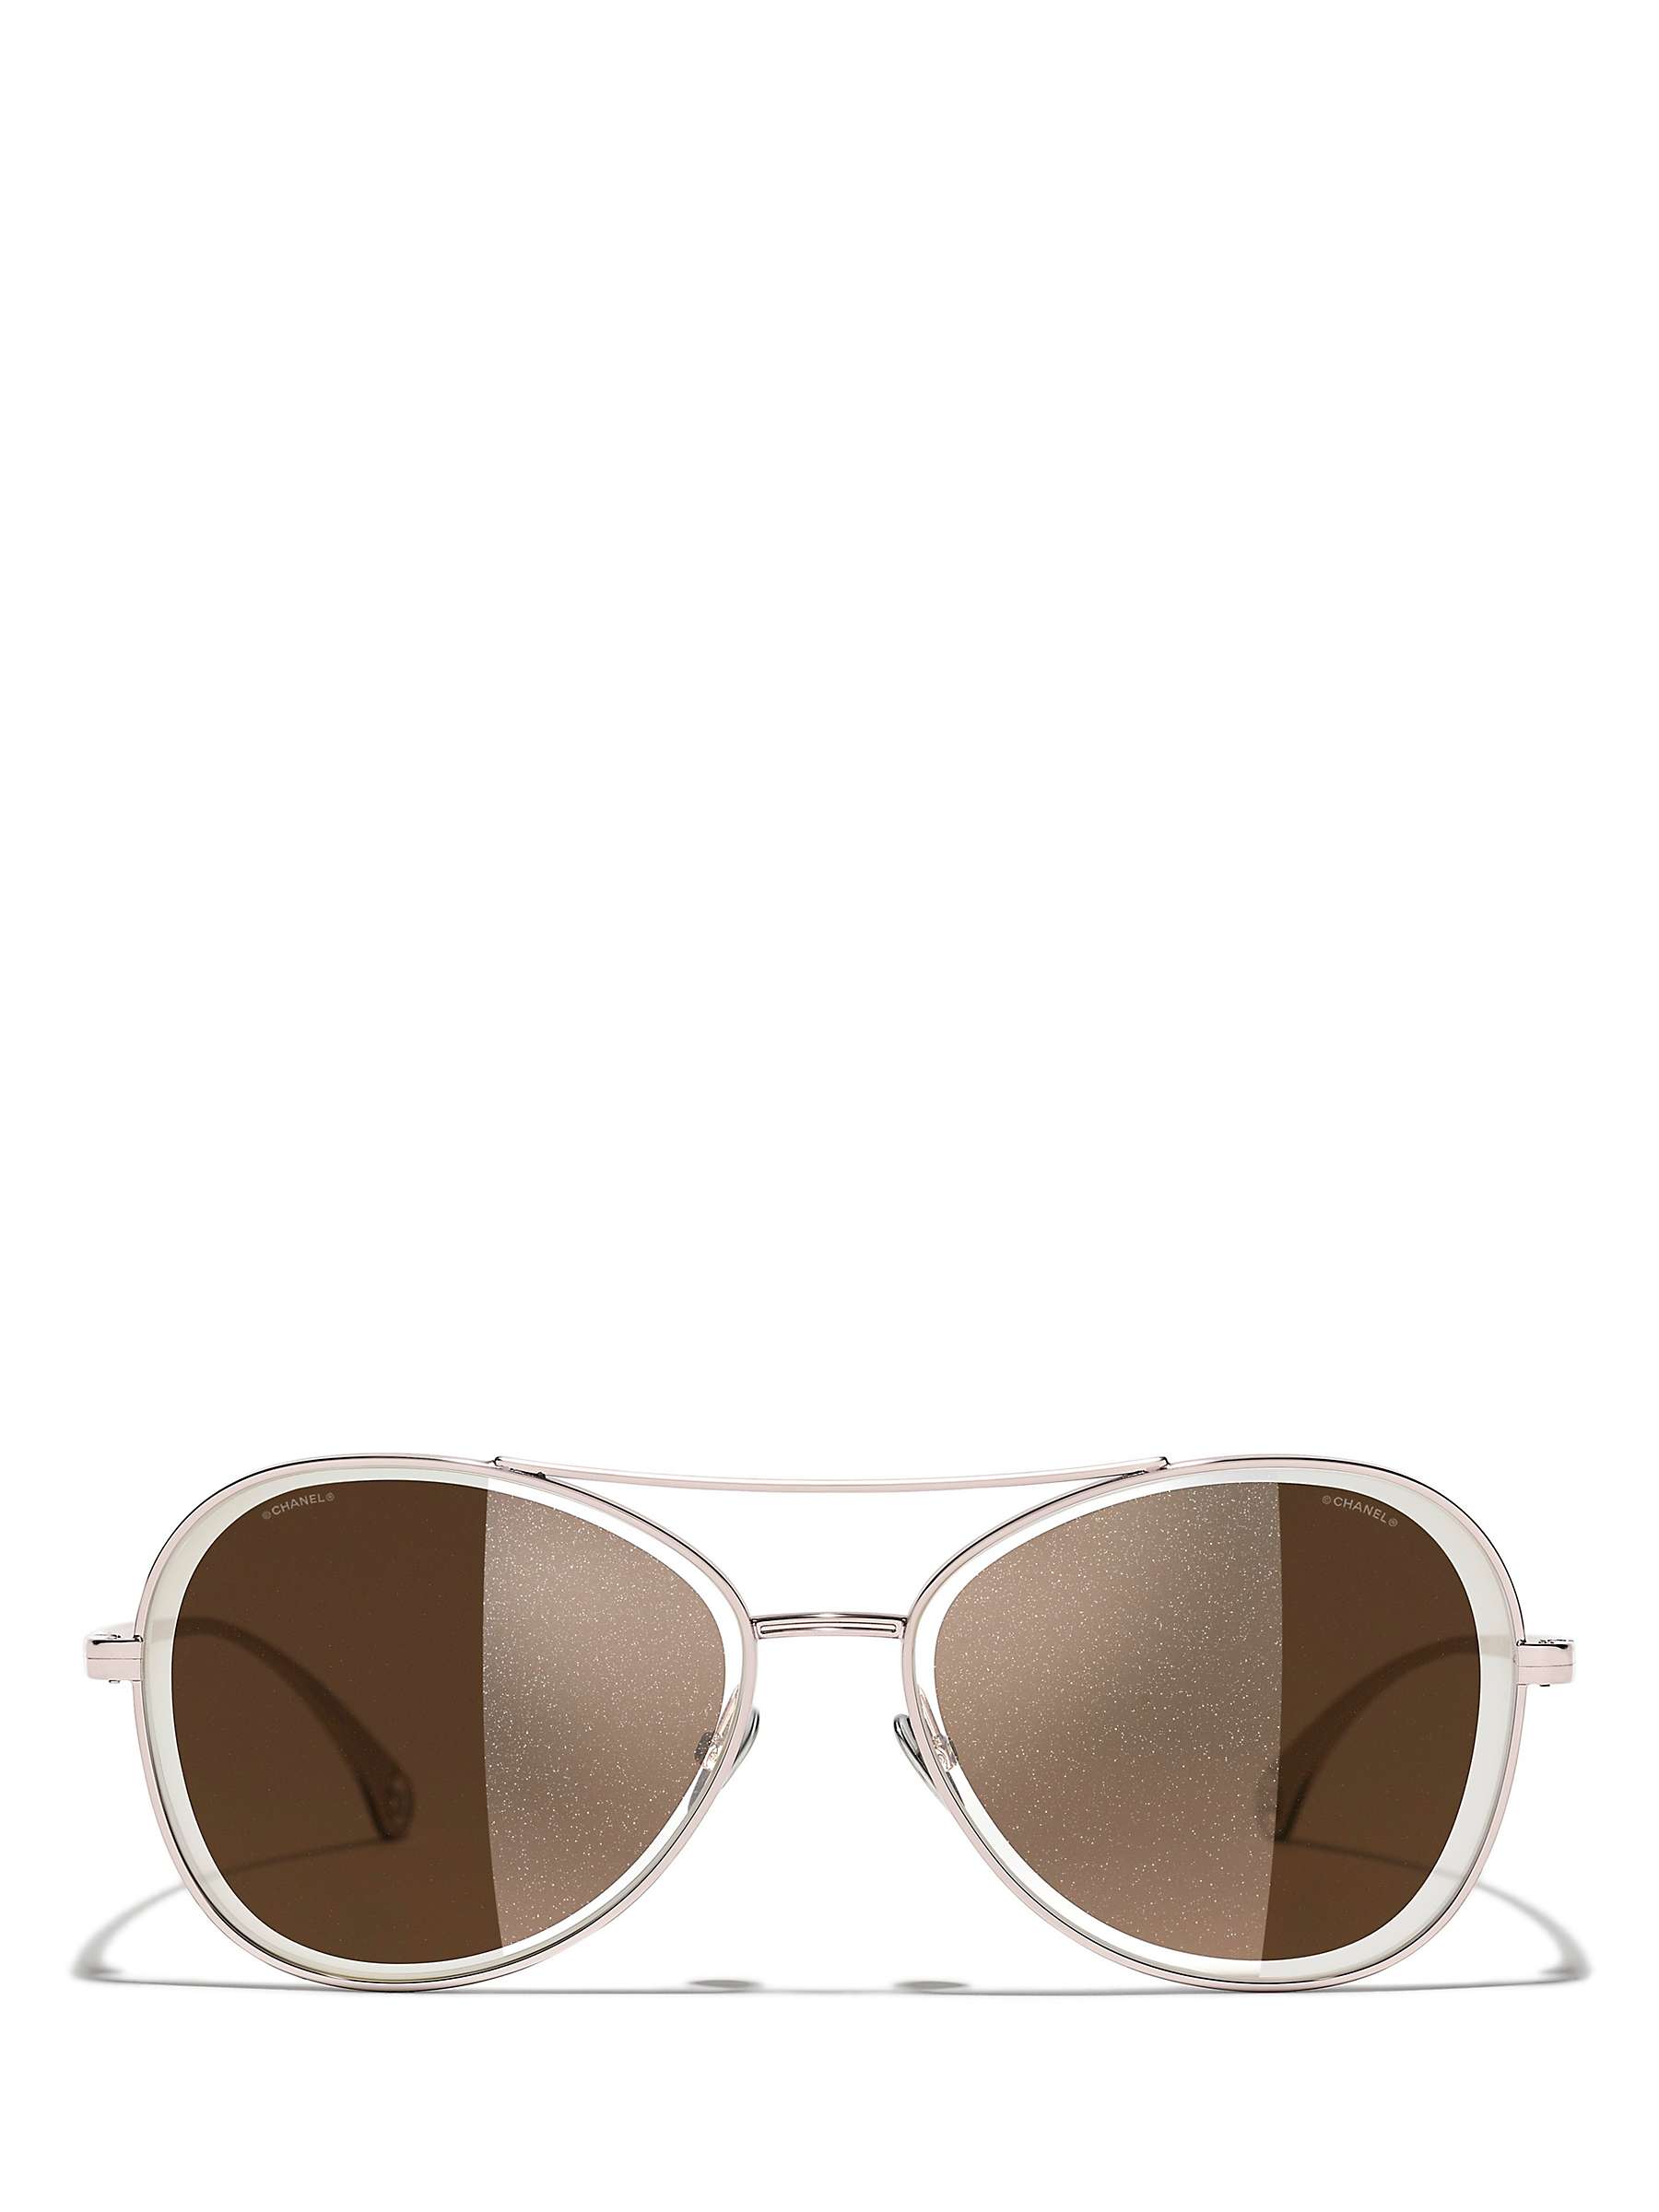 Buy CHANEL Pilot Sunglasses CH4260, Light Pink Online at johnlewis.com